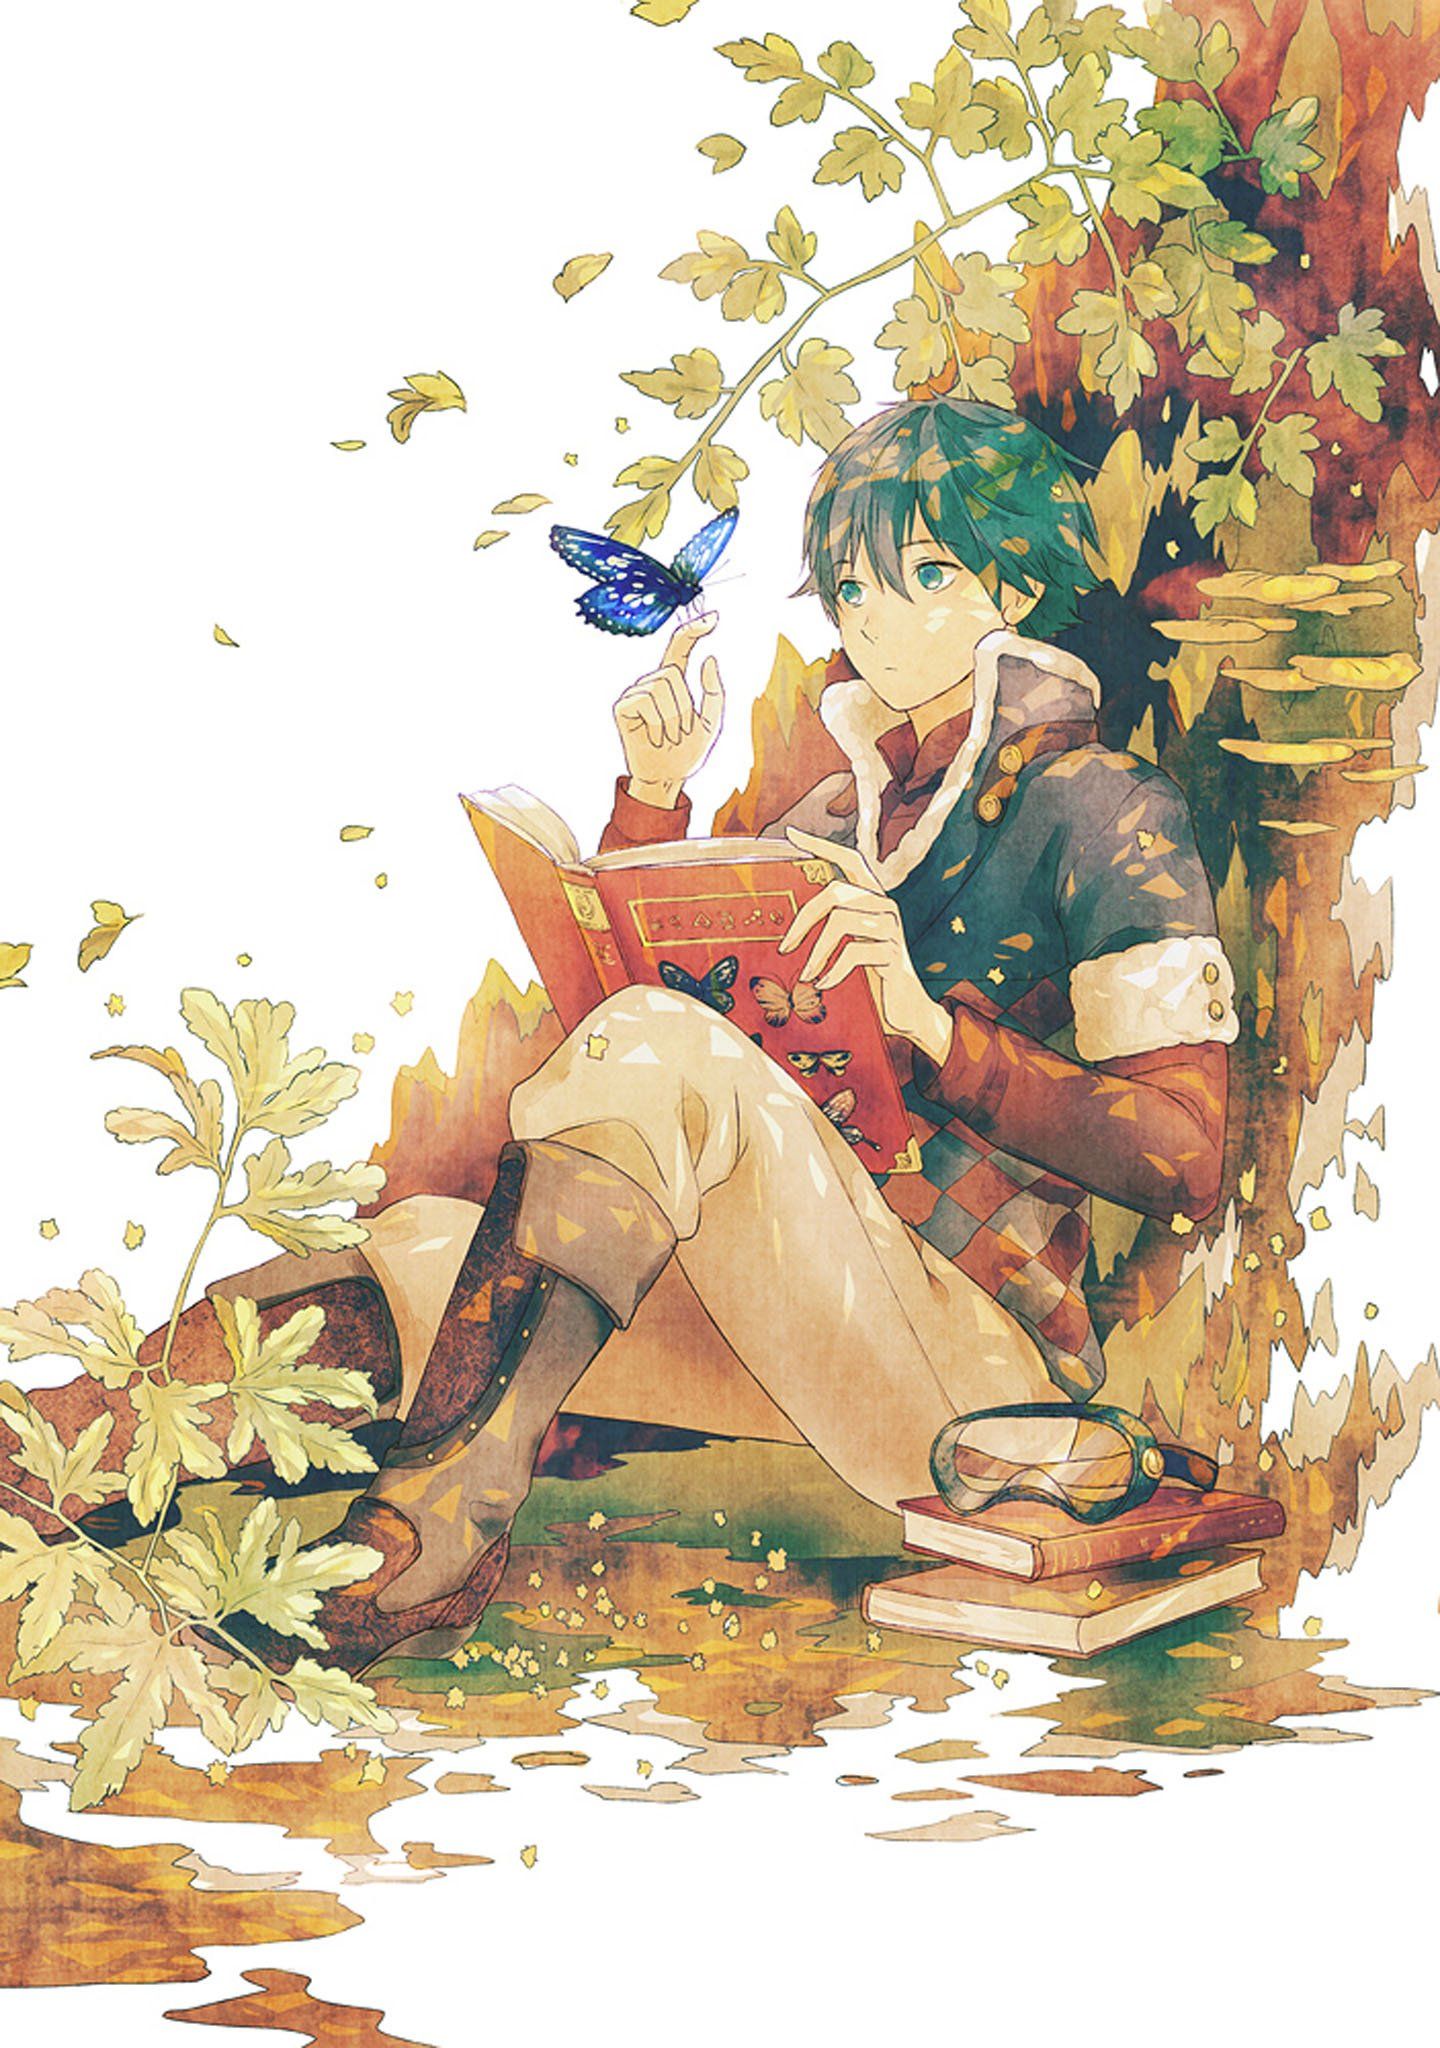 Wallpaper, 1440x2048 px, animal, anime, books, boy, butterfly, flower, tree 1440x2048